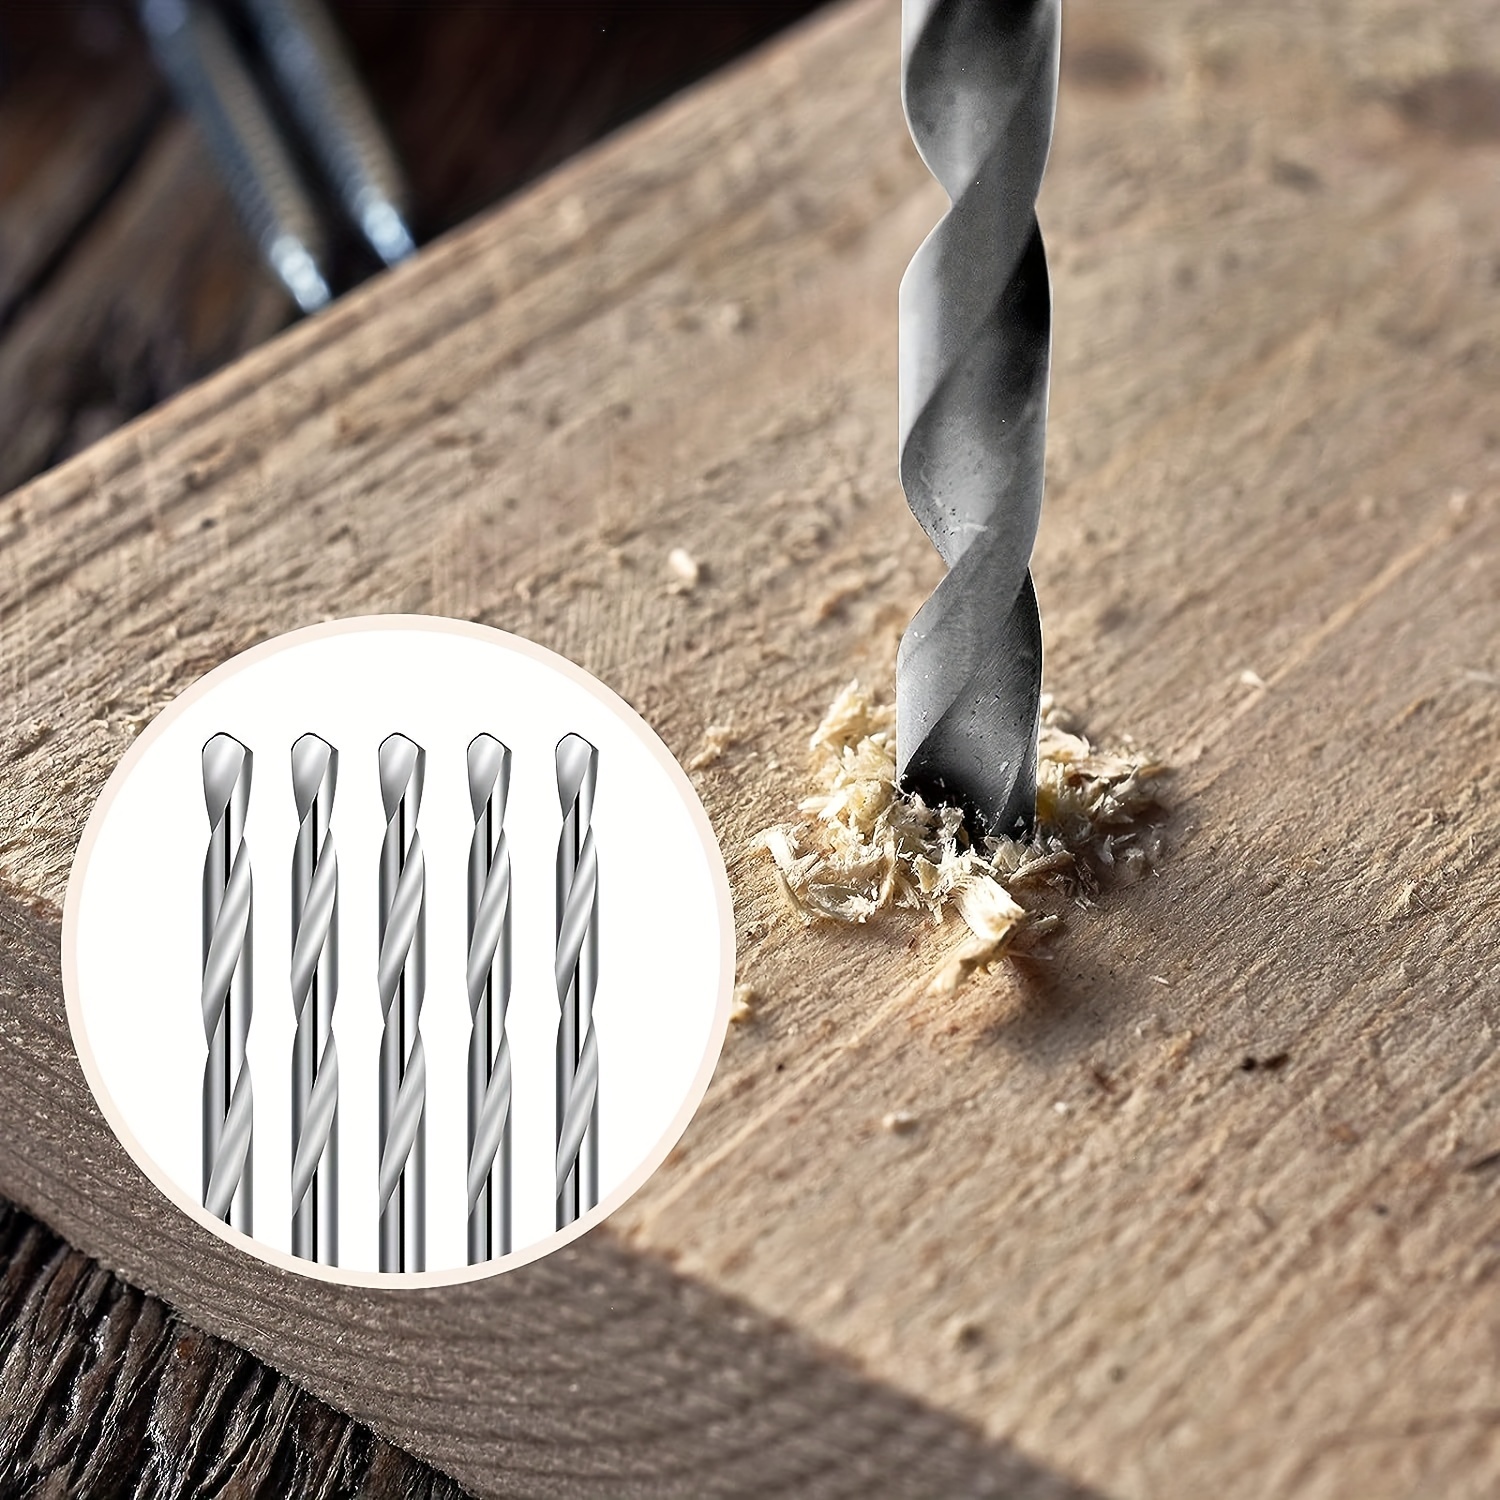 20 Pcs Micro HSS Twist Drill Bits With Aluminum Small Pin Vise Hand Drill  Bit for Shells Jewelry making Model Craft DIY Tool,0.5mm-3mm